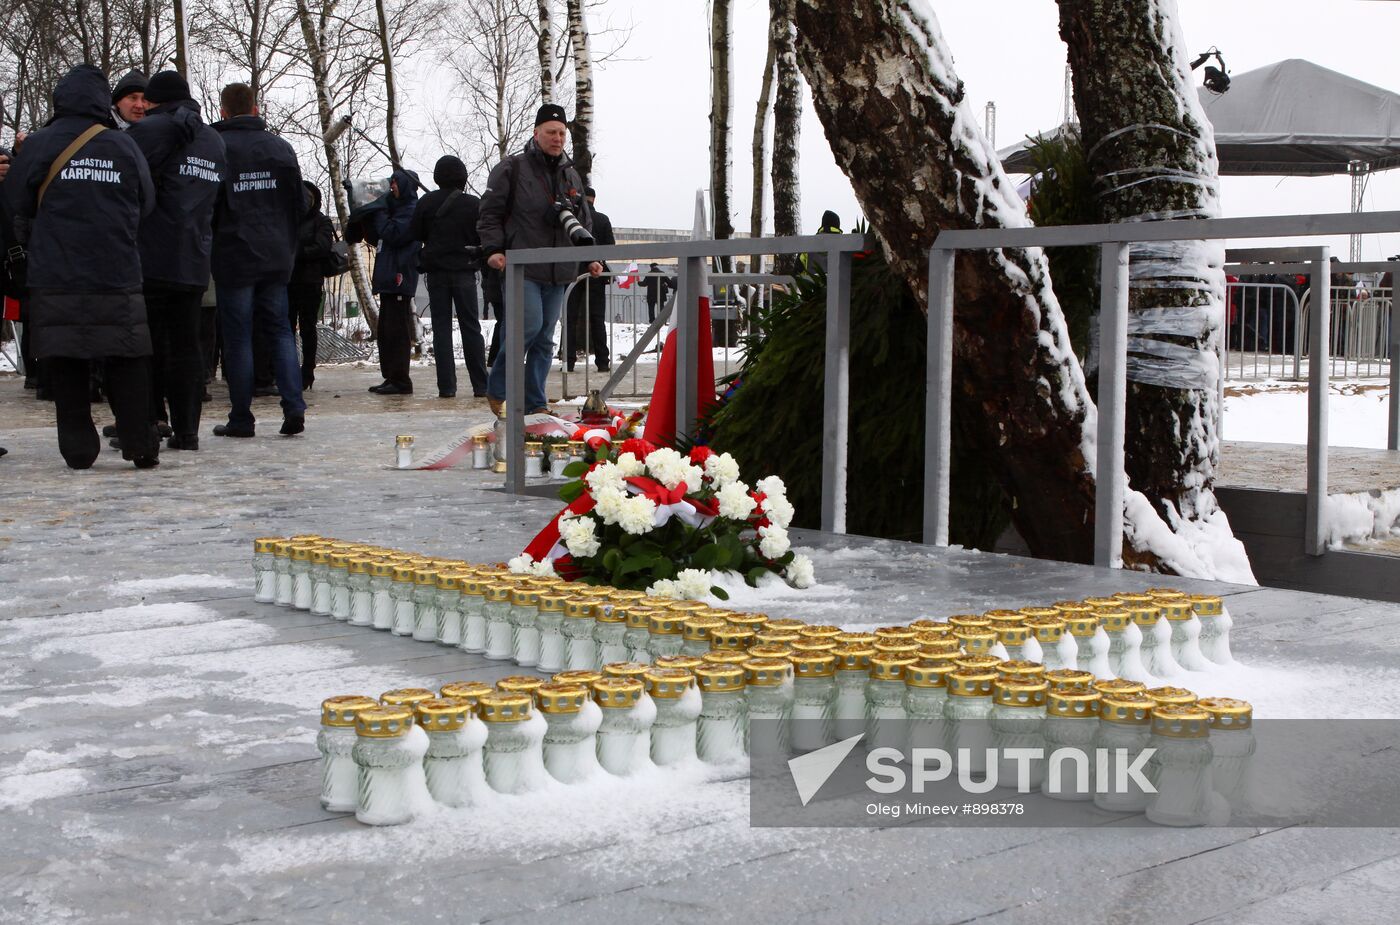 Memorial events mark one year of Kaczynski plane crash